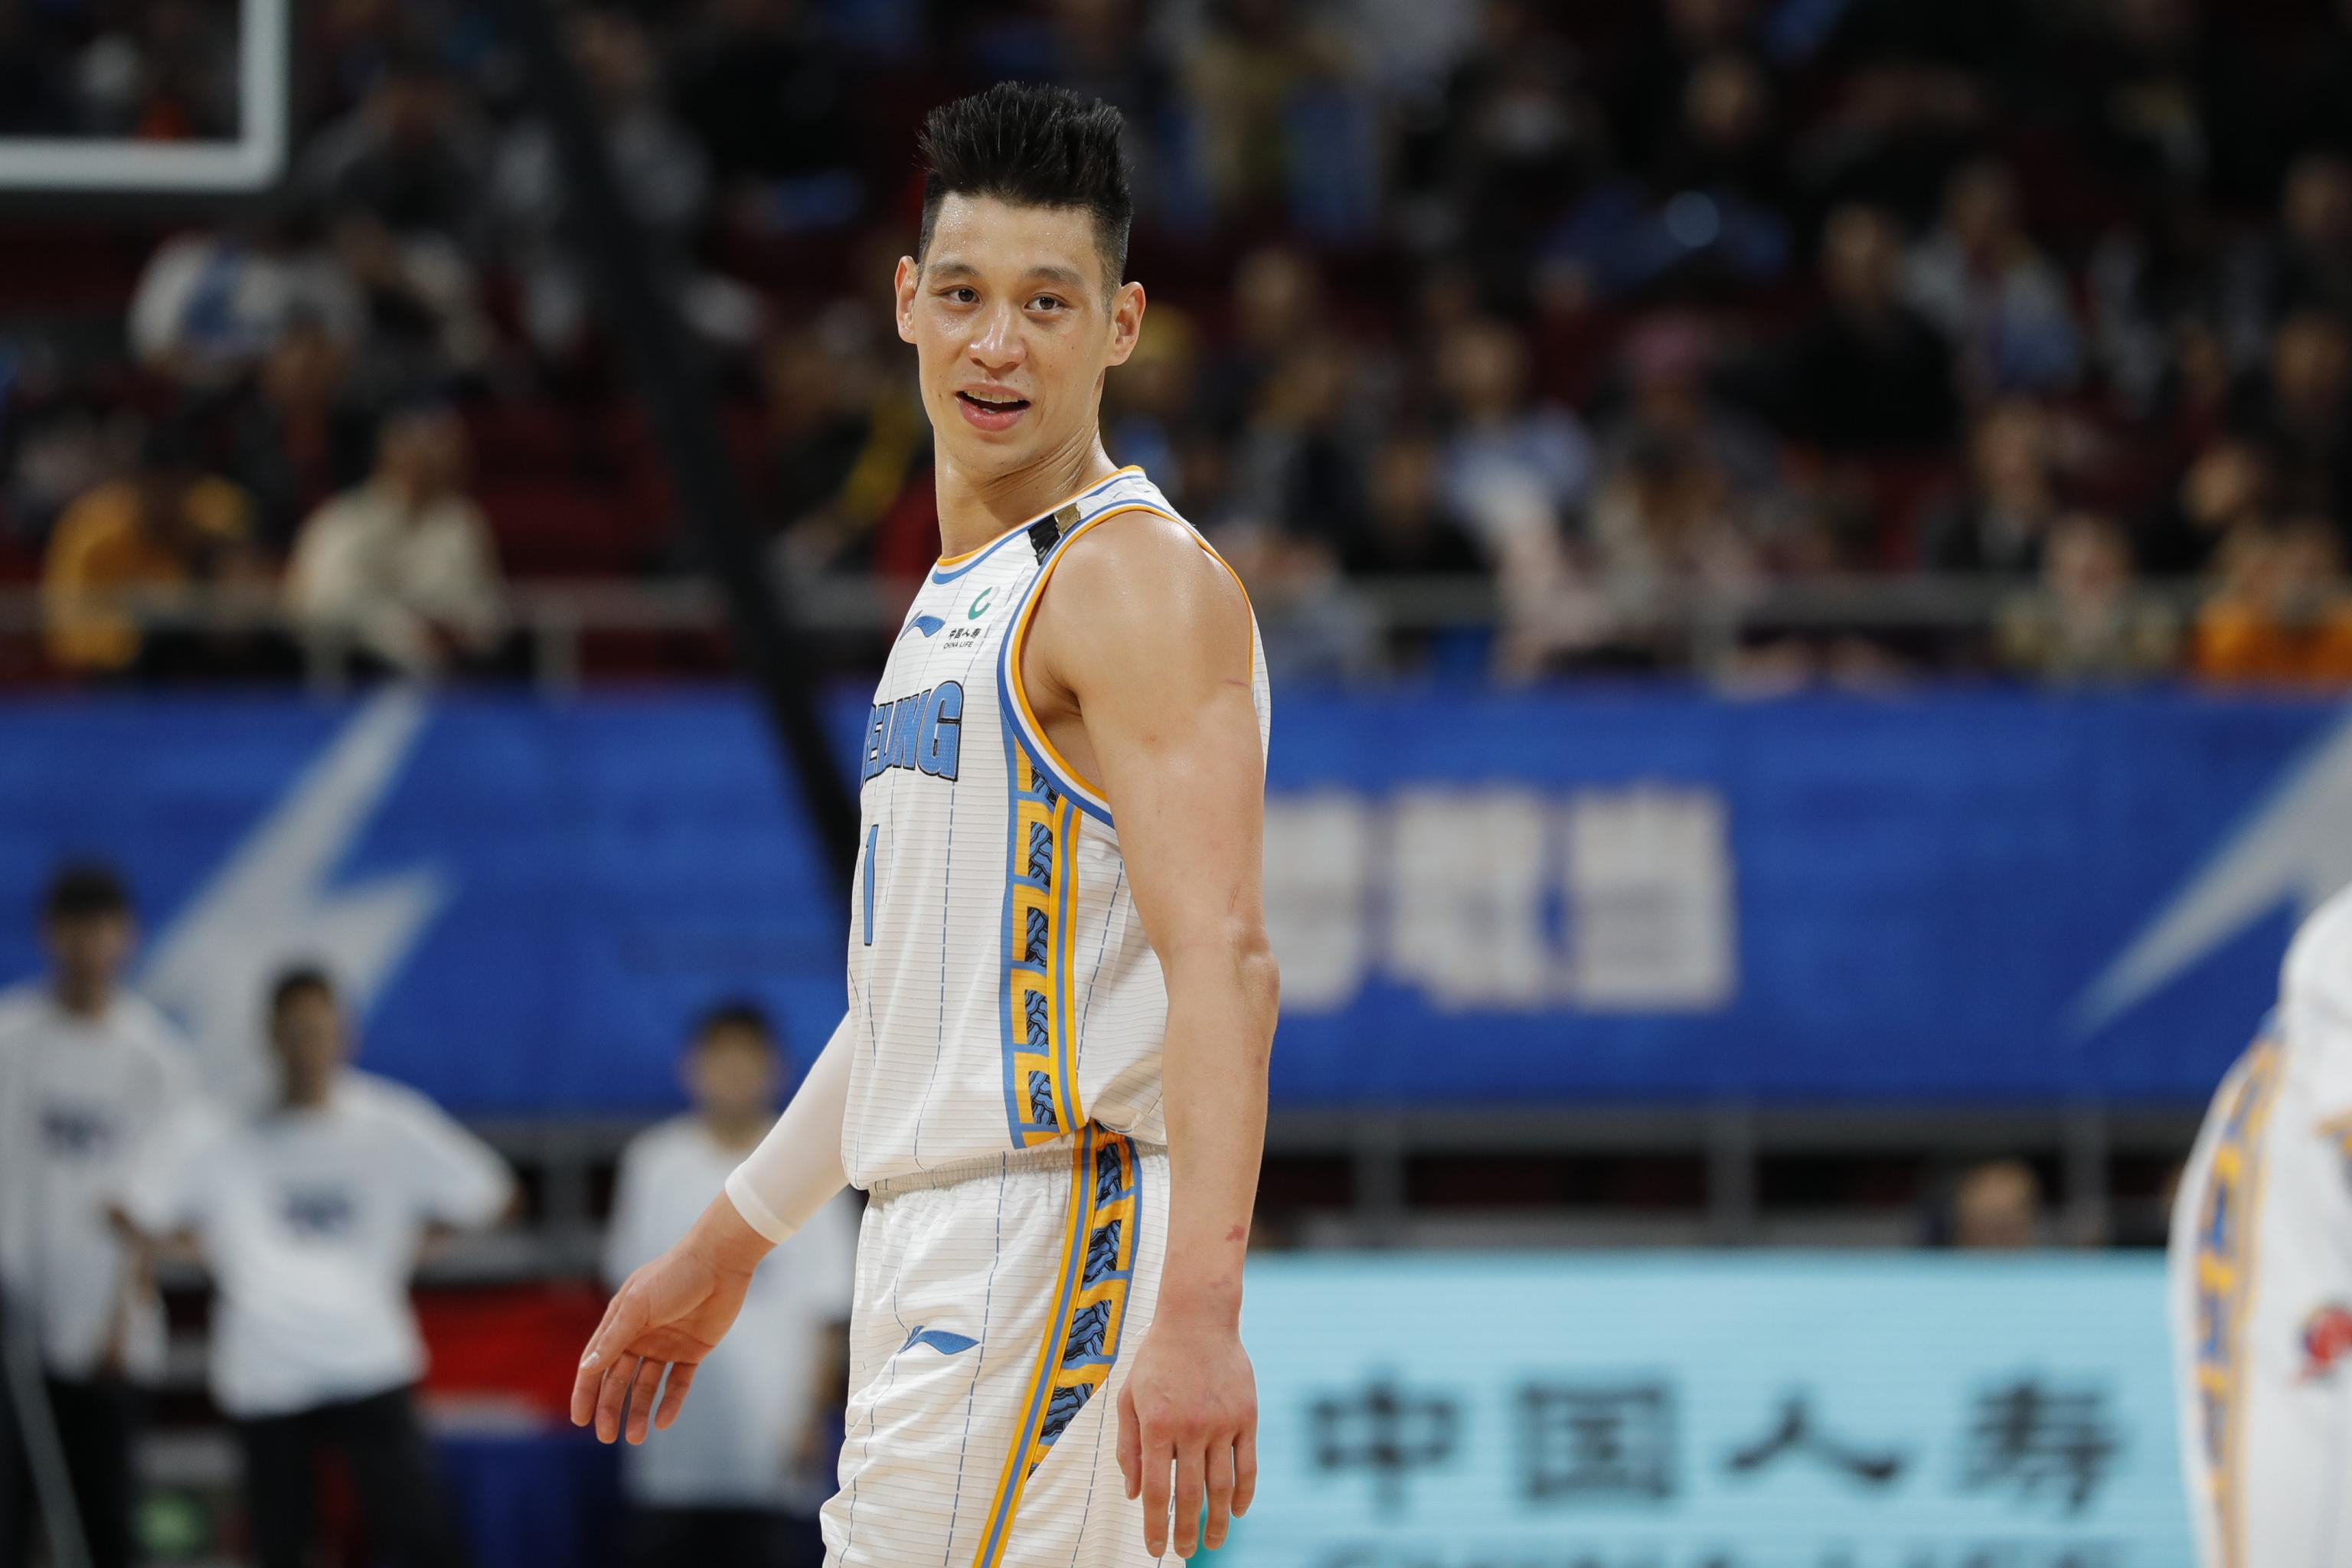 China Jeremy Lin 7 Beijing Ducks Basketball Jersey Blue Top 